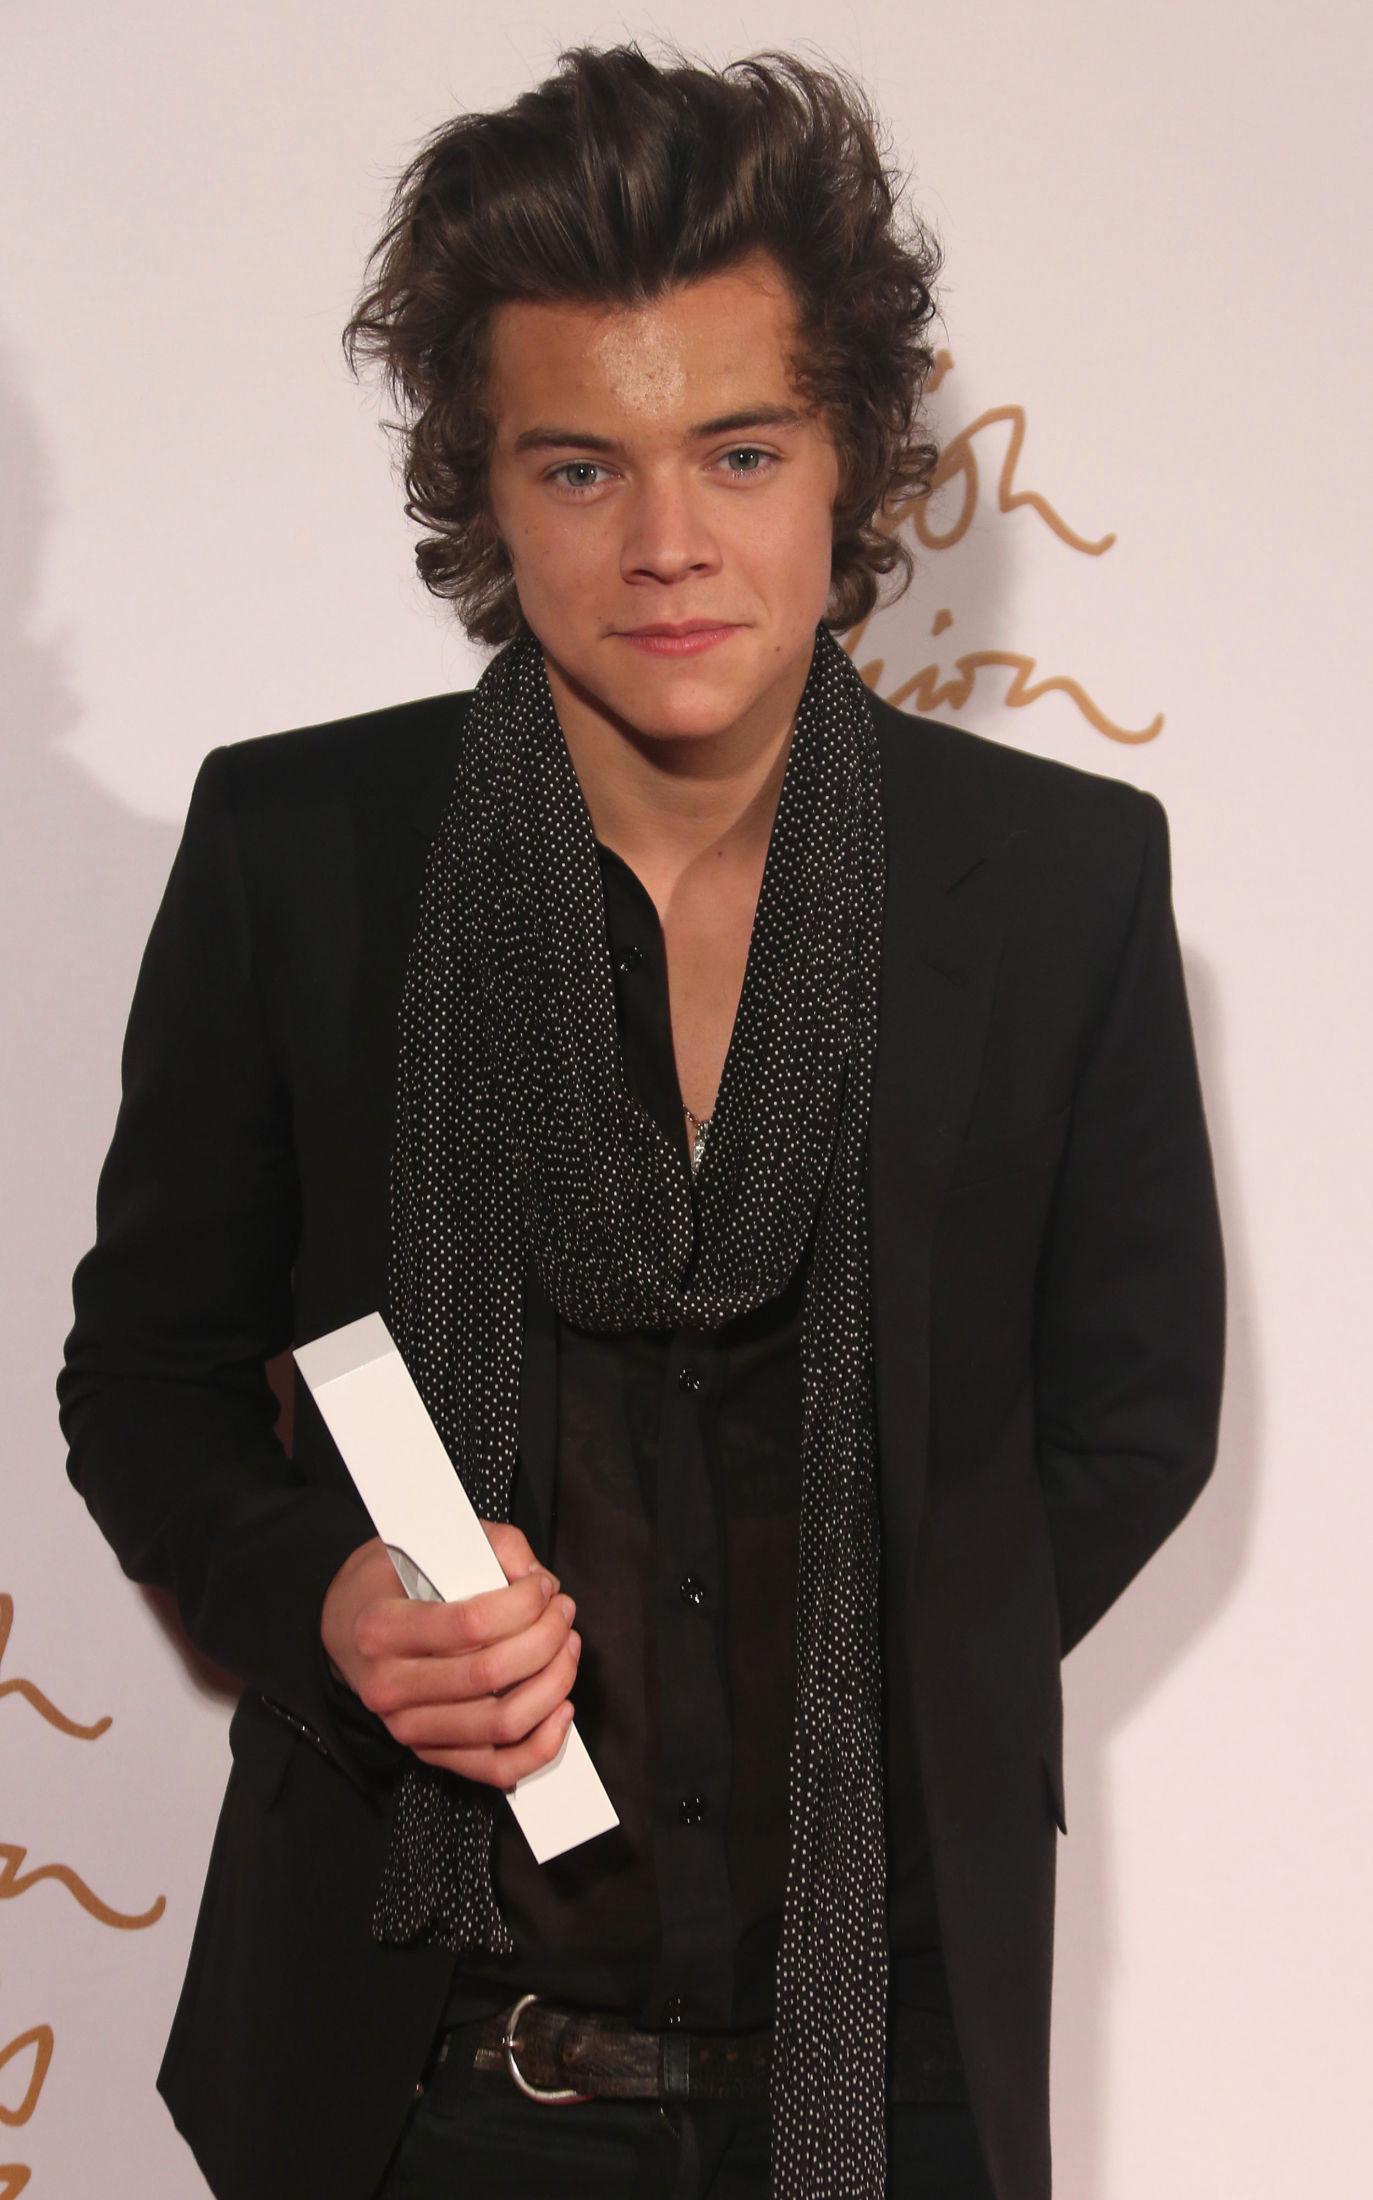 FIKK STILPRIS: Harry Styles fikk pris for stilen sin under British Style Awards i 2013. Foto: AP